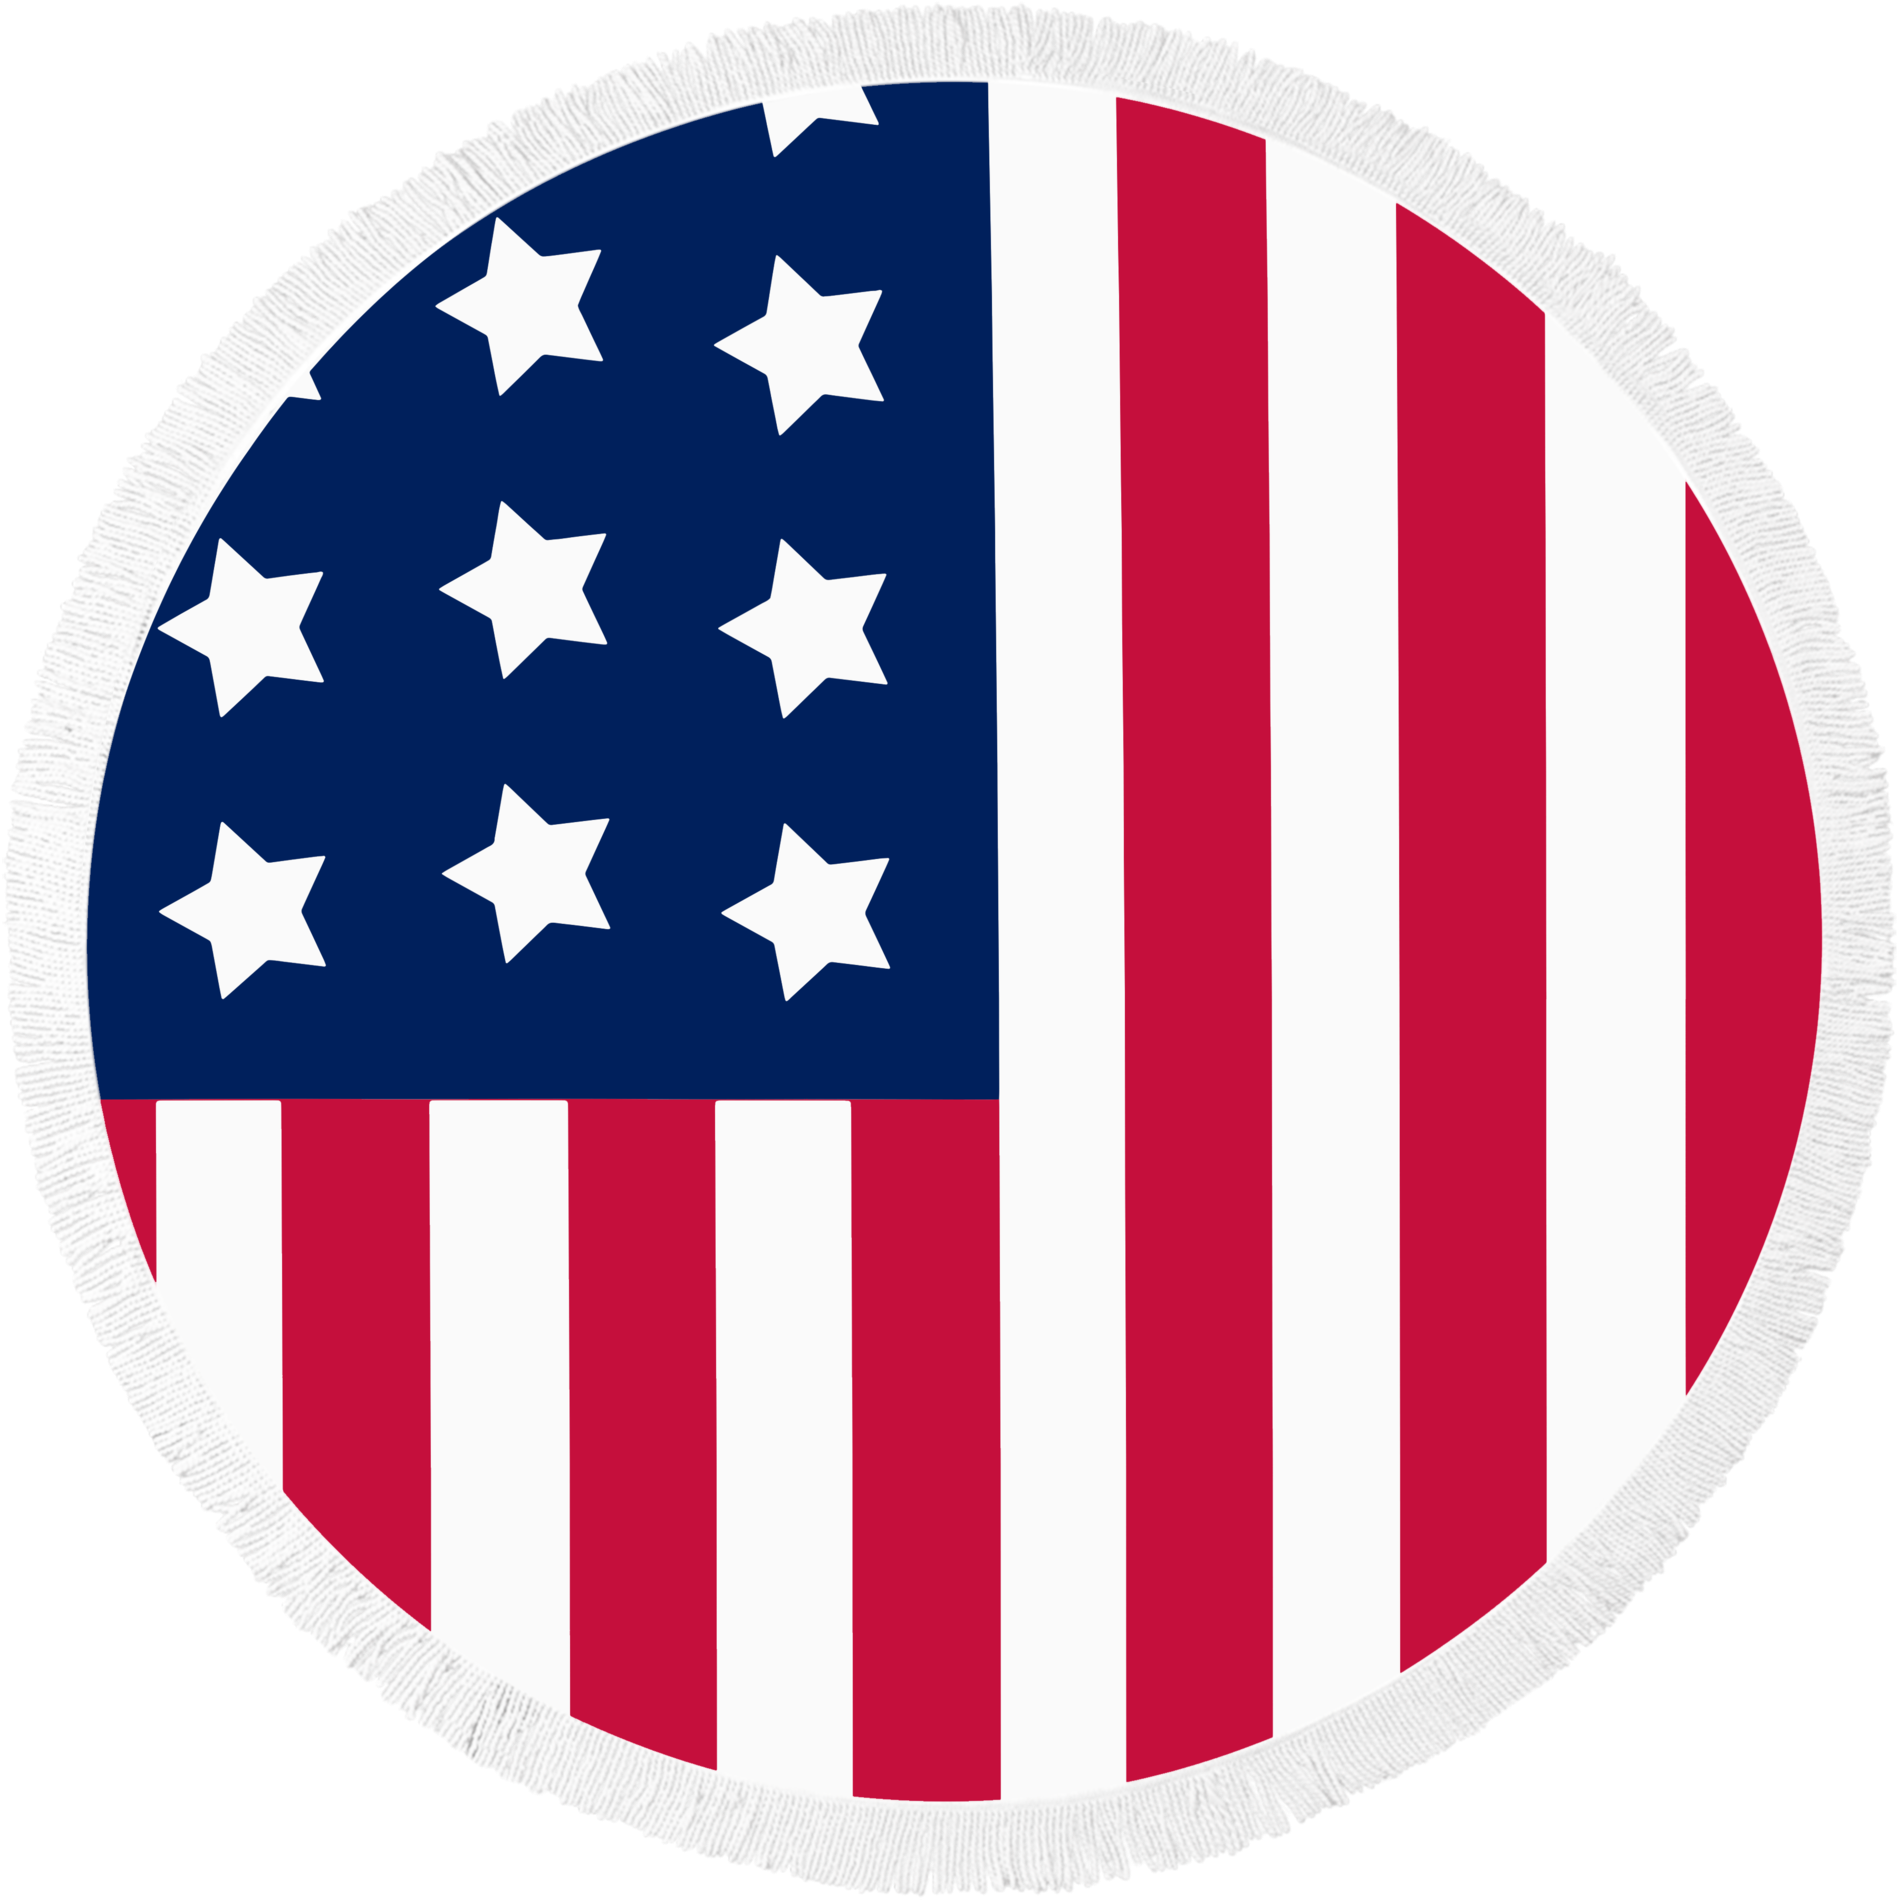 Download Usa Flag Png Image Jpg Black And White Stock Bandera De Estados Unidos Png Png Image With No Background Pngkey Com